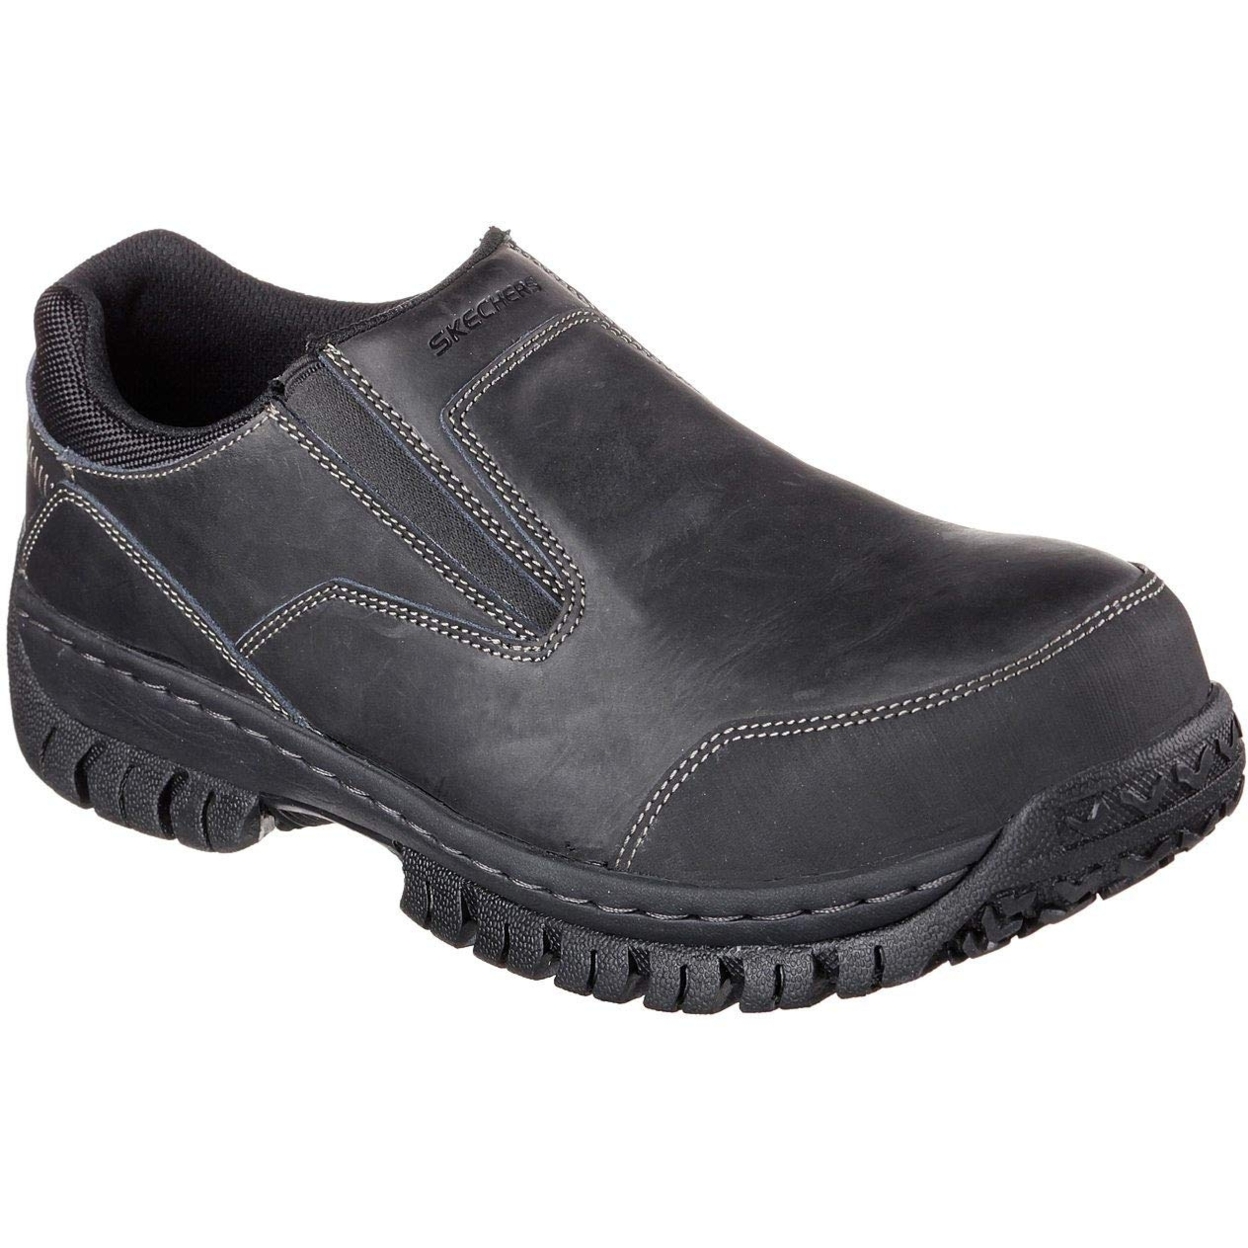 Skechers For Work Men's Hartan Steel Toe Slip-On Shoe Varies BLACK - BLACK, 10.5